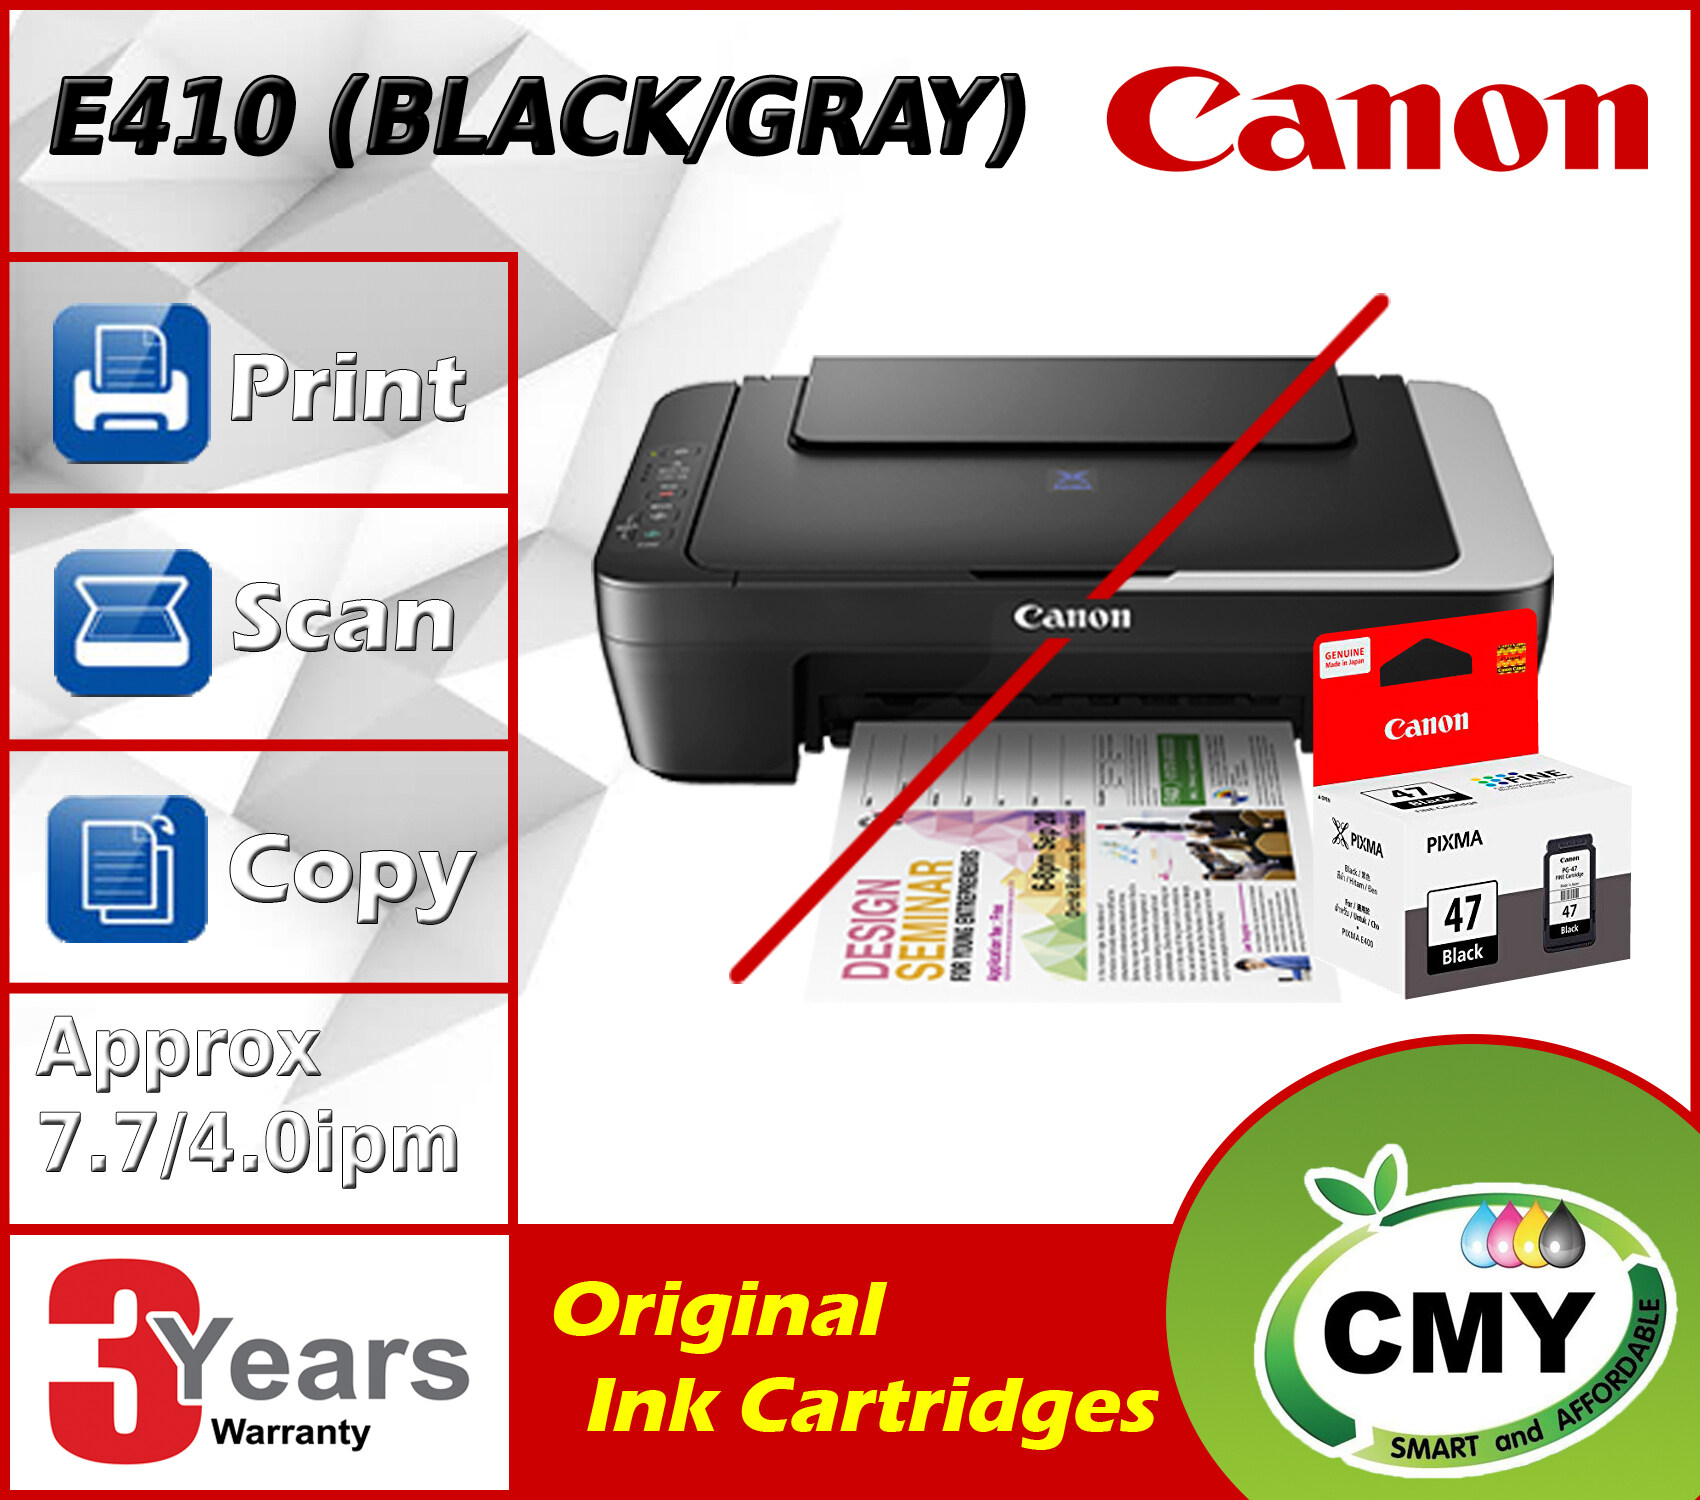 Canon PIXMA E410 Ink Efficient 3 in 1 Multi-function Printer Print Scan Copy similar as 2676 L3110 L1110 G2010 2135 2336 G2020 L3210 L3216 DCP-J100 DCP-T310 DCP-T220